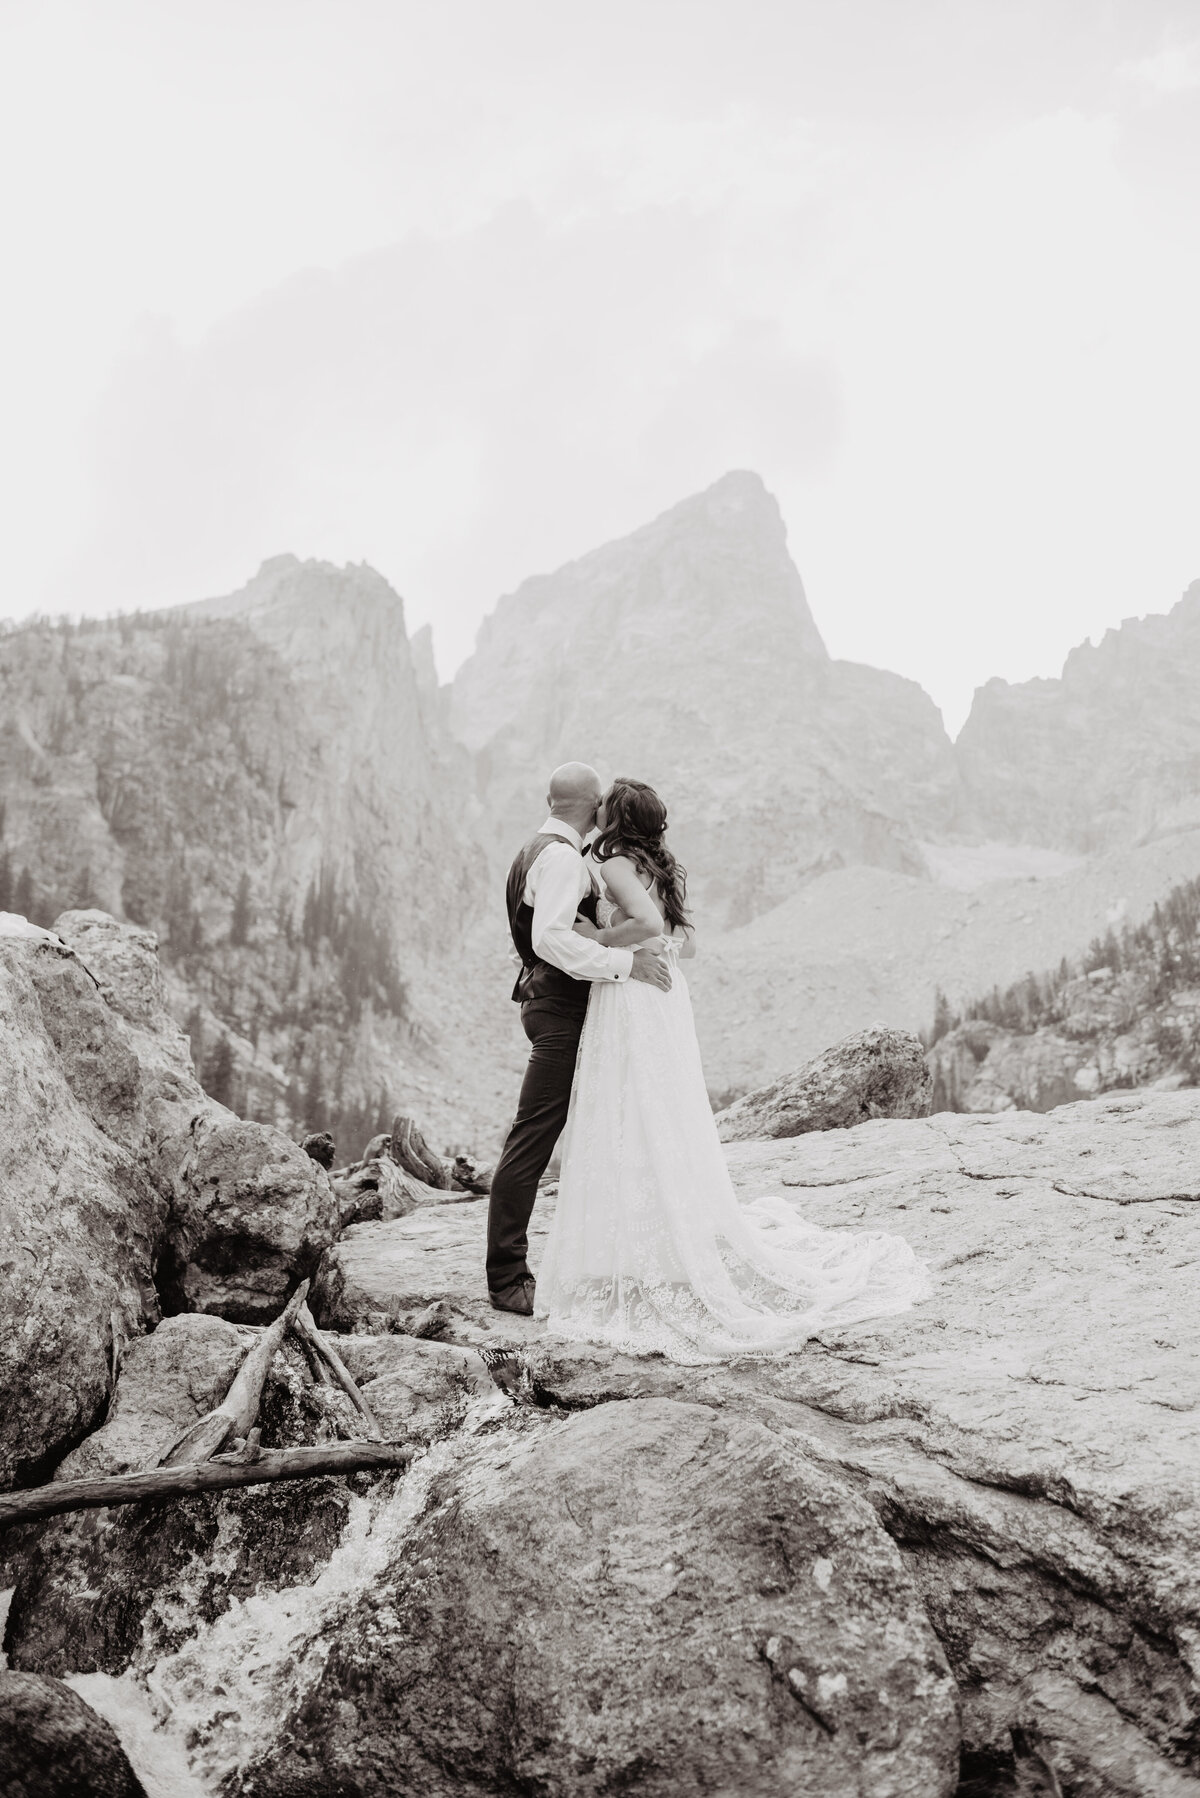 Jackson Hole Photographers capture husband and wife hugging